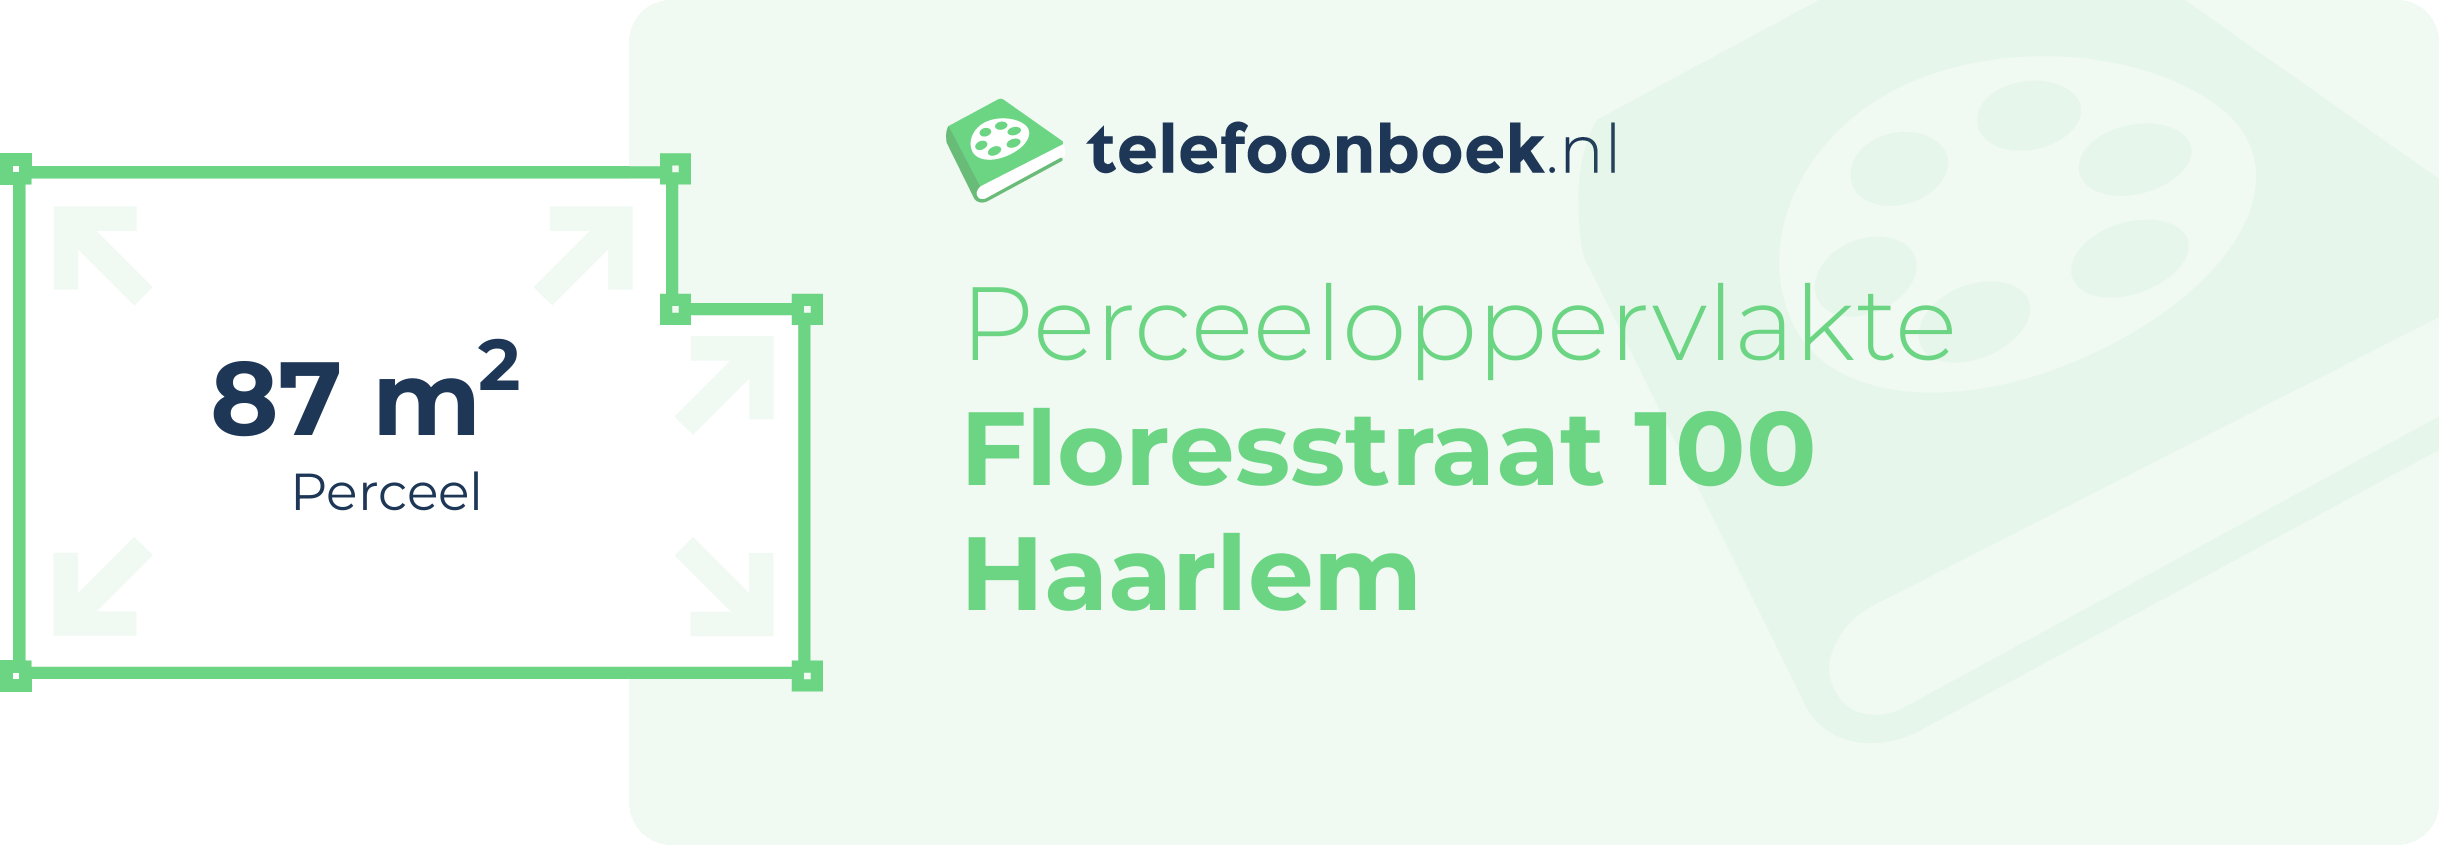 Perceeloppervlakte Floresstraat 100 Haarlem